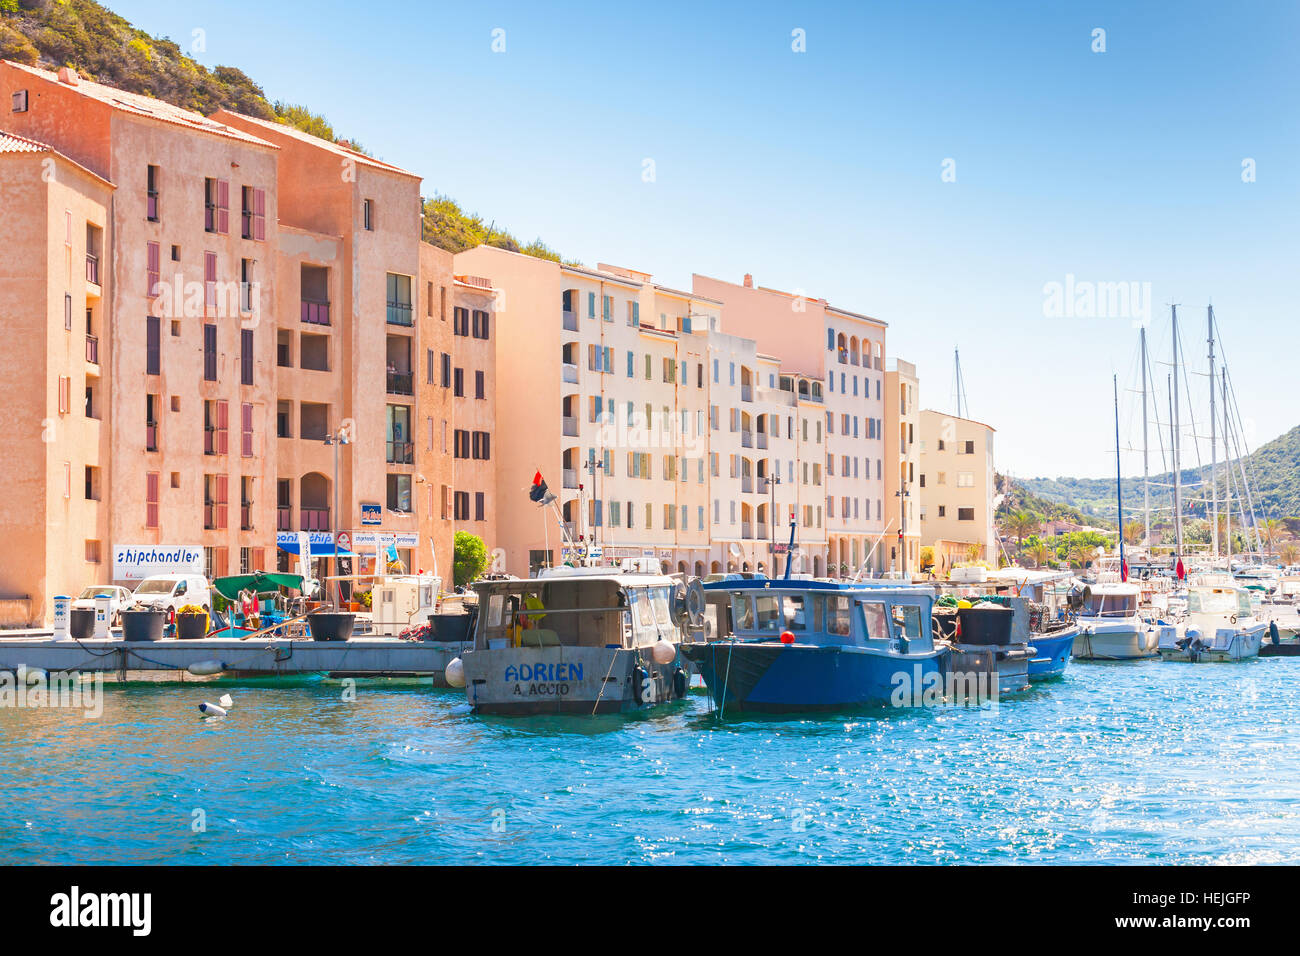 Bonifacio, France - July 2, 2015: Small pleasure boats and sailing yachts are moored near embankment of Bonifacio, small resort port city of Corsica Stock Photo